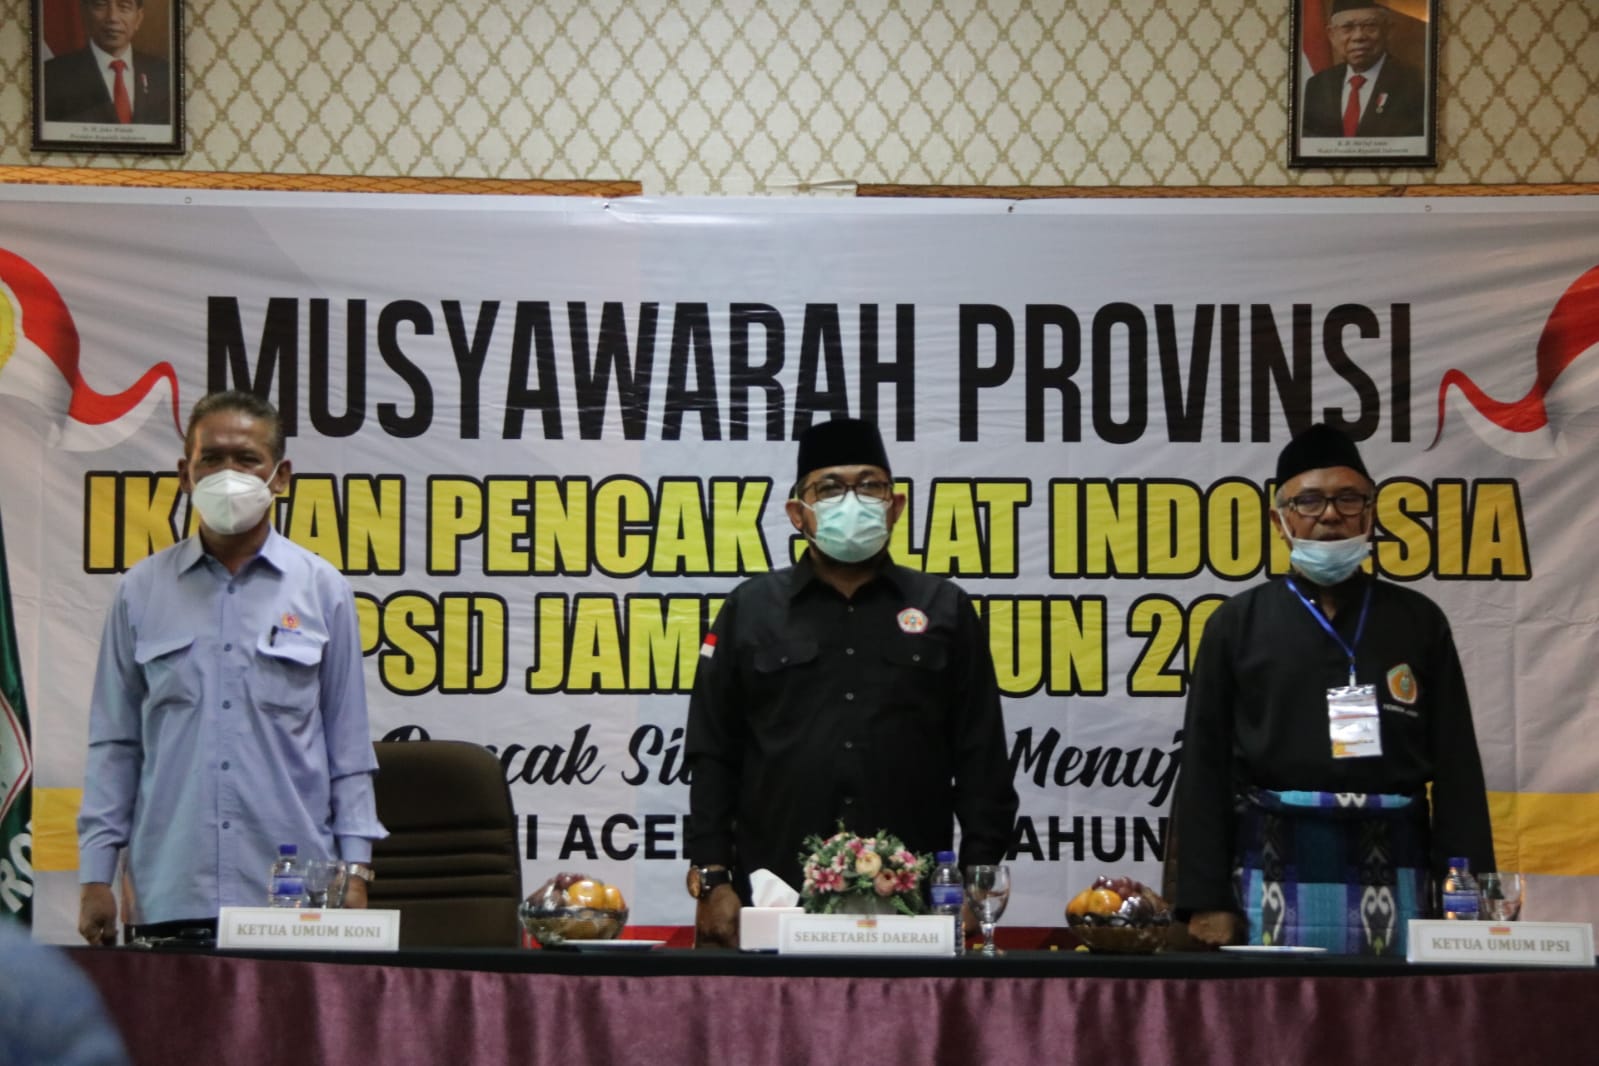 Sekda Sudirman (Tengah) Hadiri acara Musyawarah Provinsi Ikatan Pencak Silat Indonesia (IPSI) Provinsi Jambi